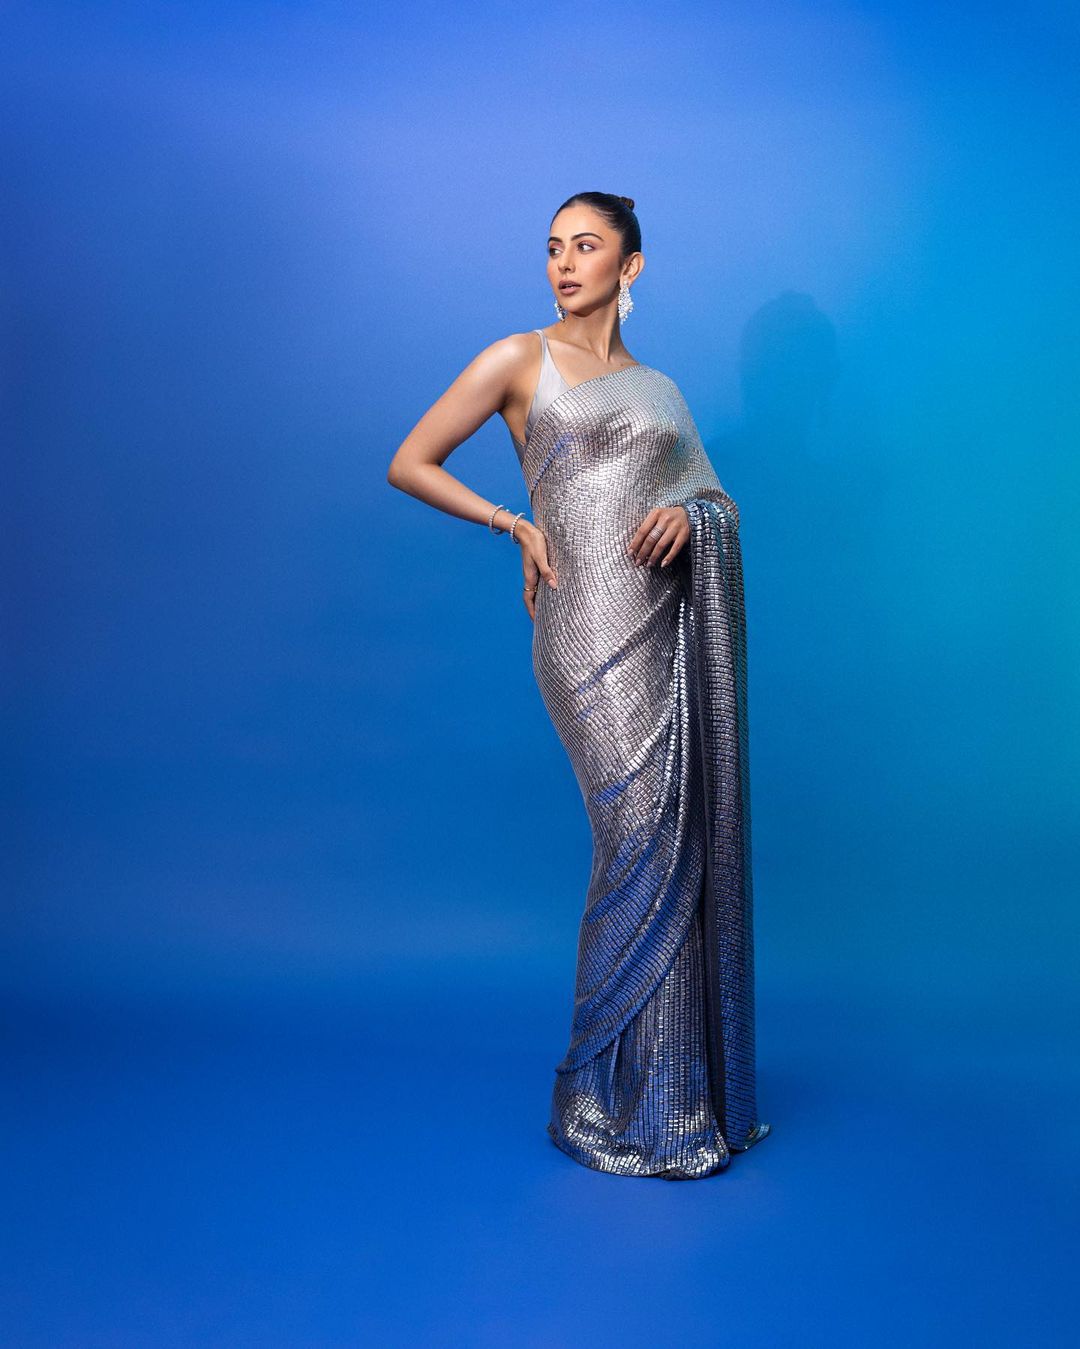 Rakul preet singh hot saree stills at lokmat most stylish awards 2023